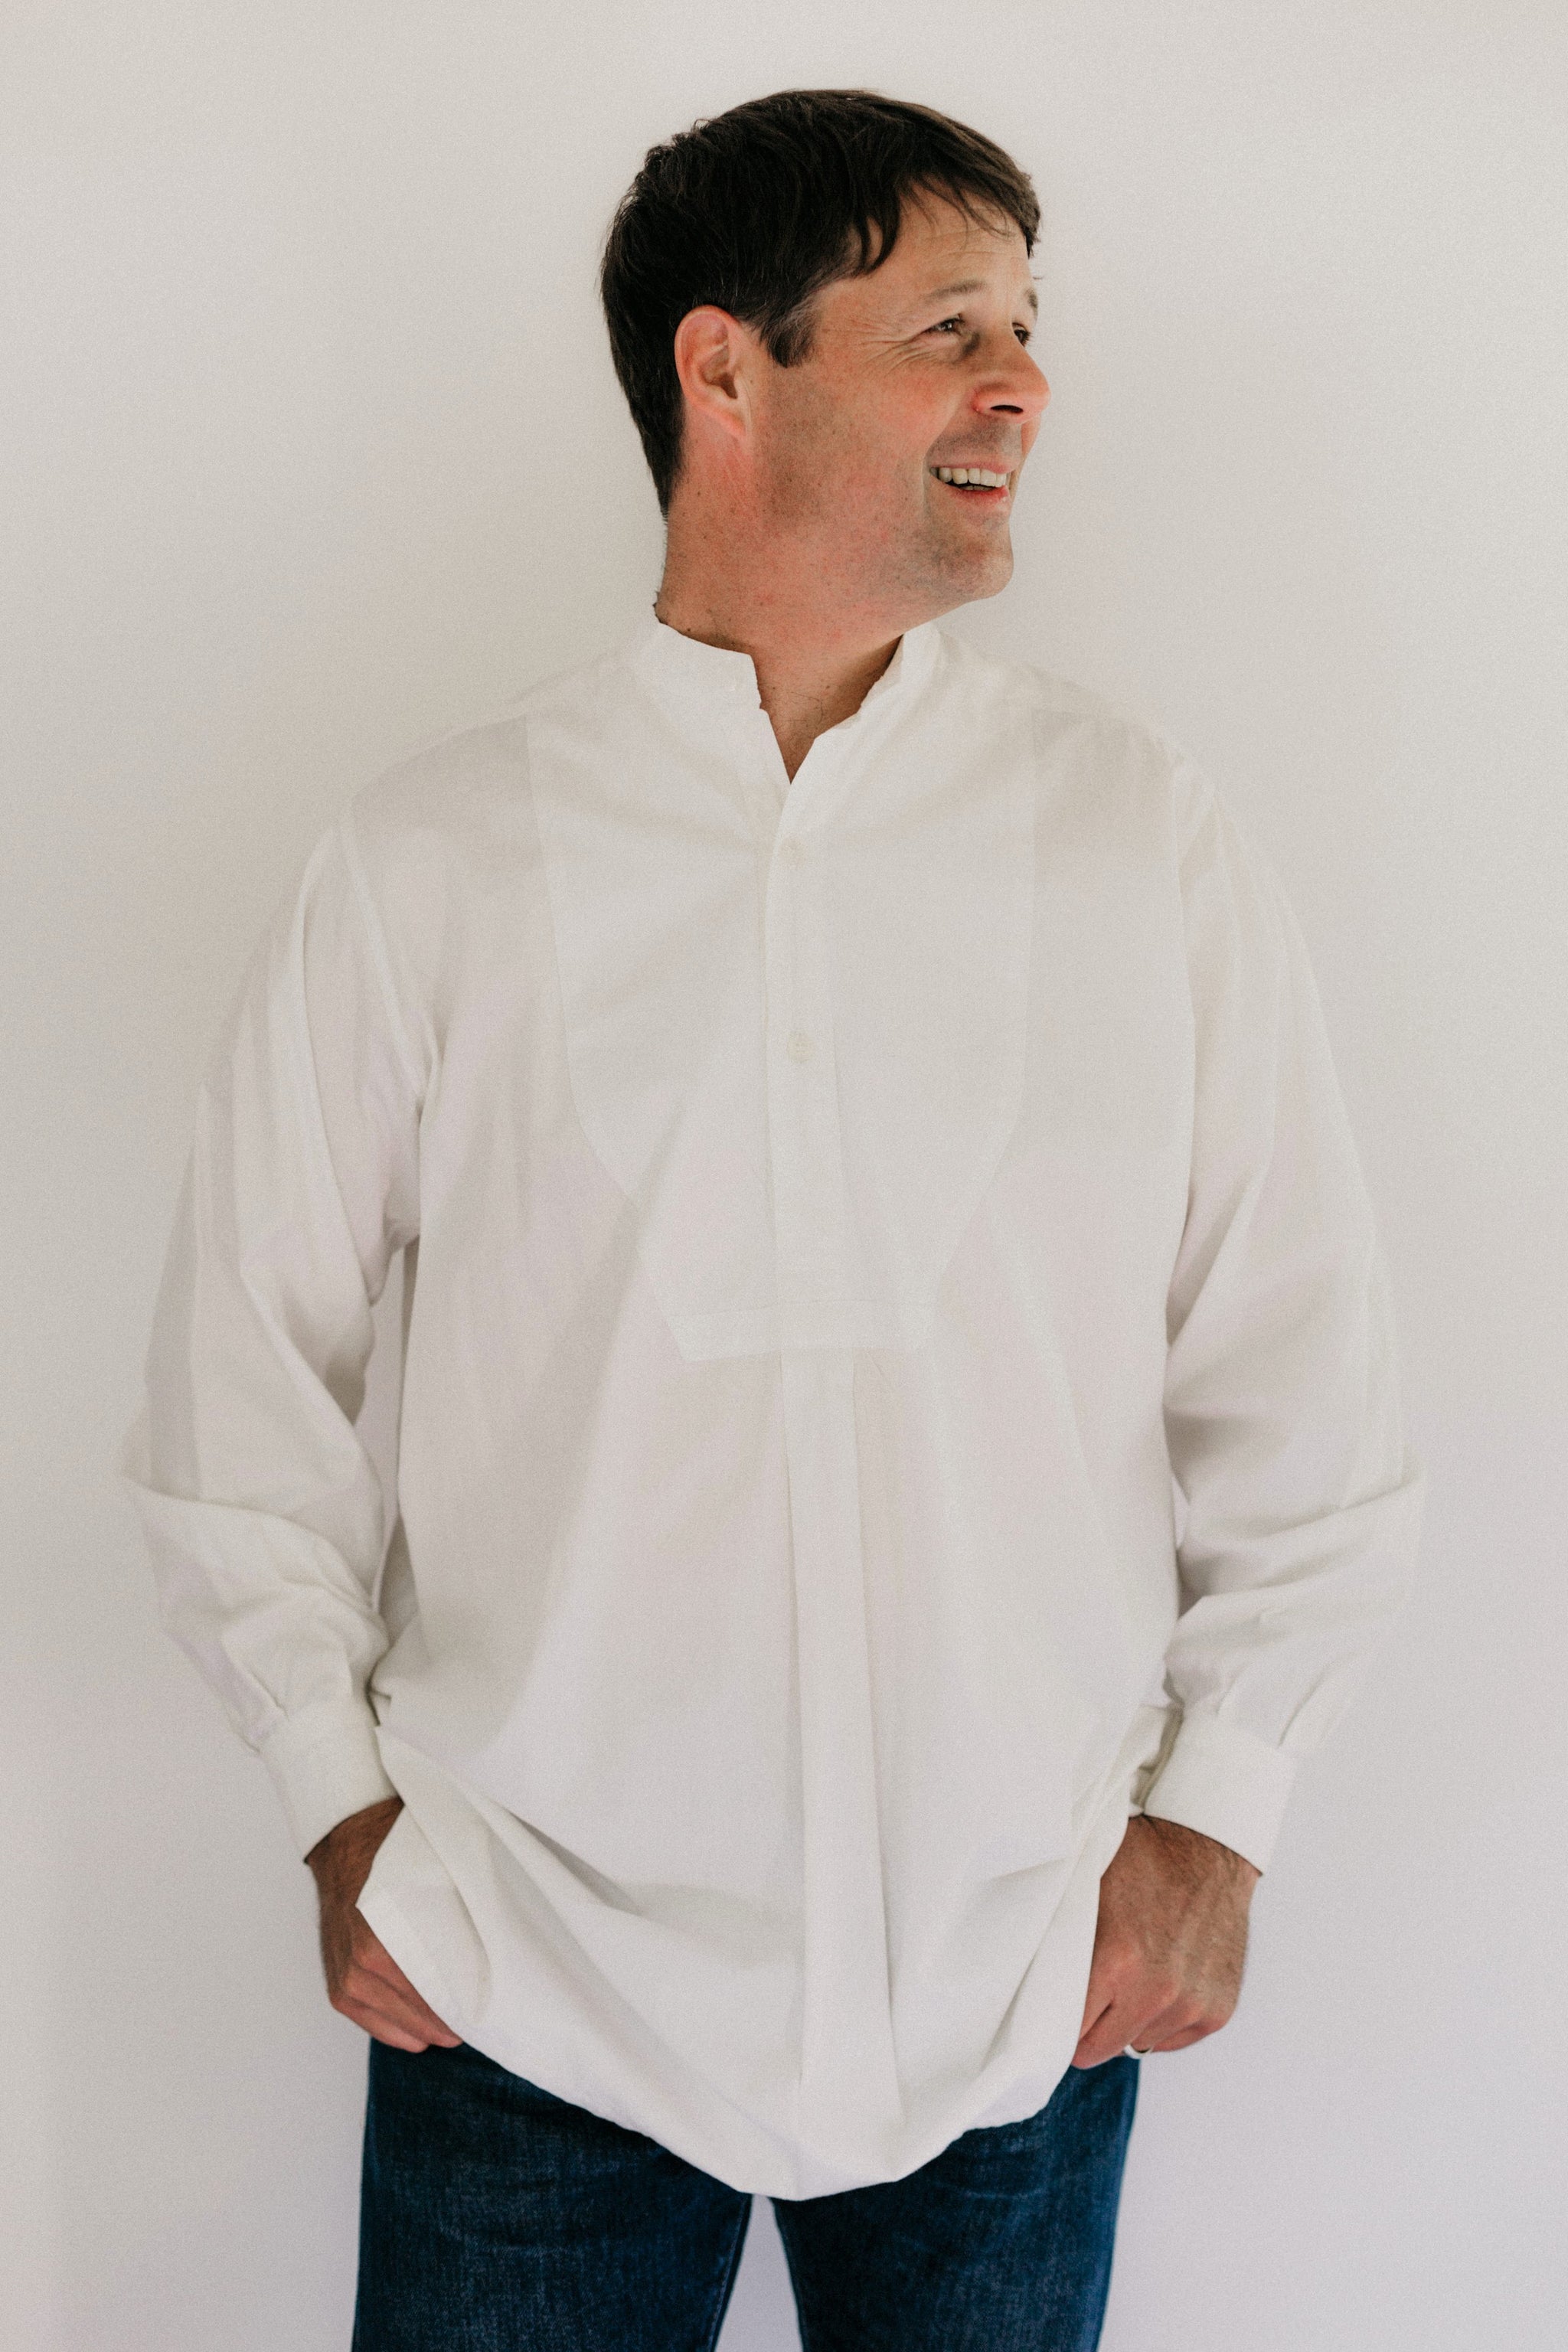 Short-Sleeved Denim Overshirt - Ready-to-Wear